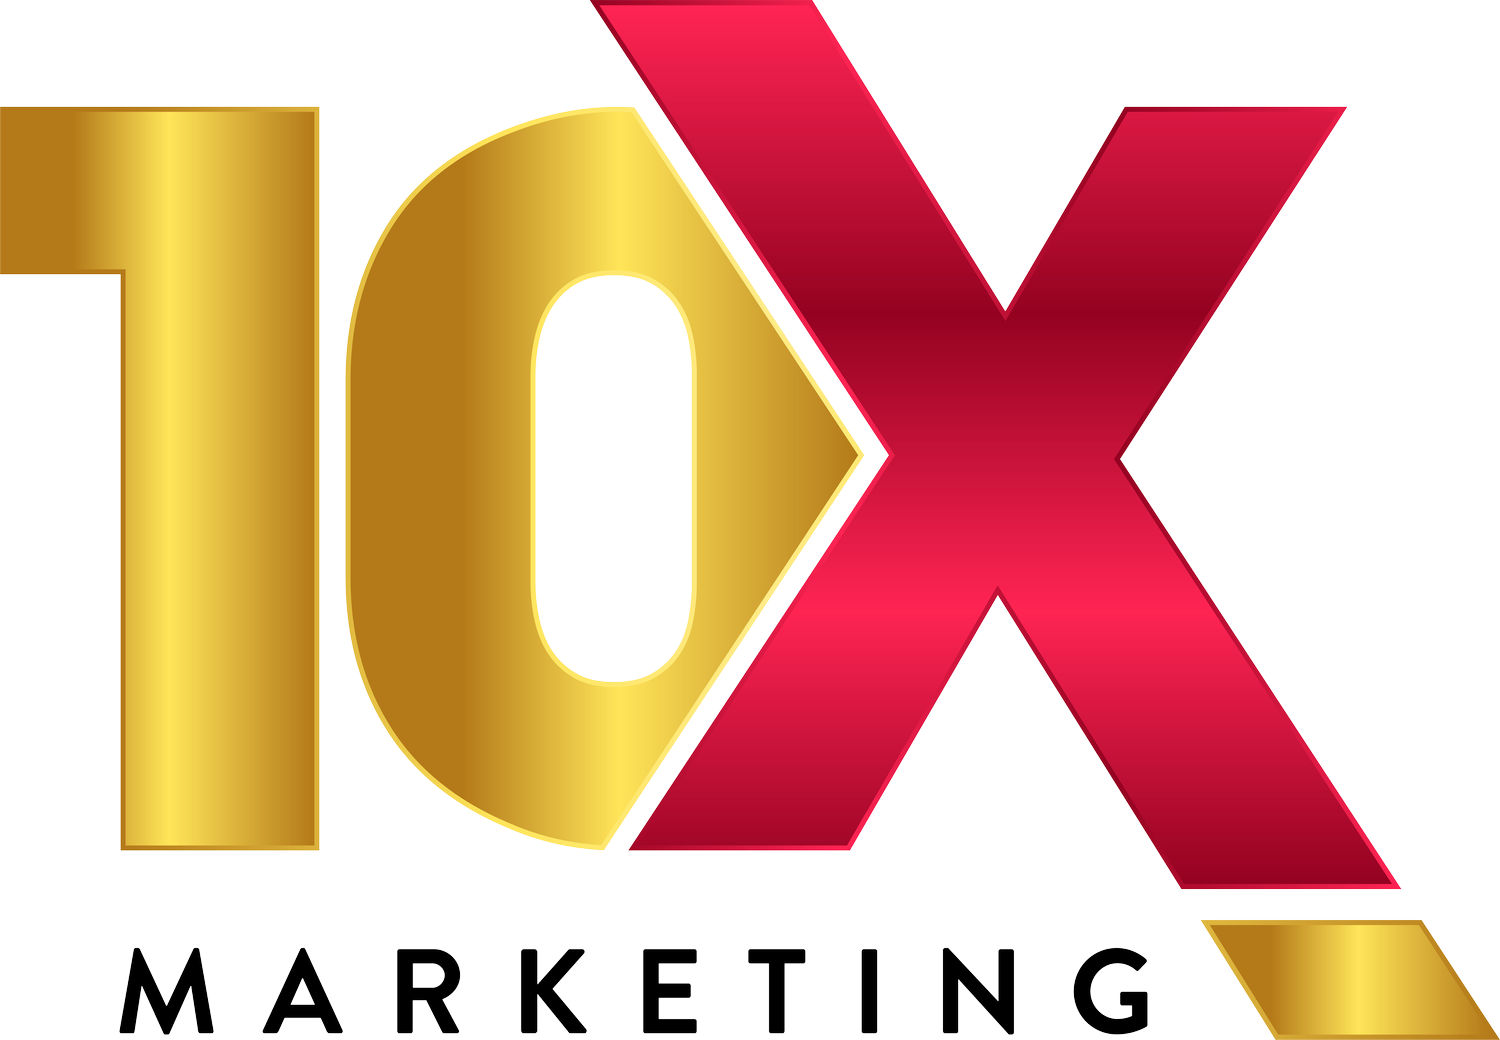 10X Marketing - Perth Marketing Agency